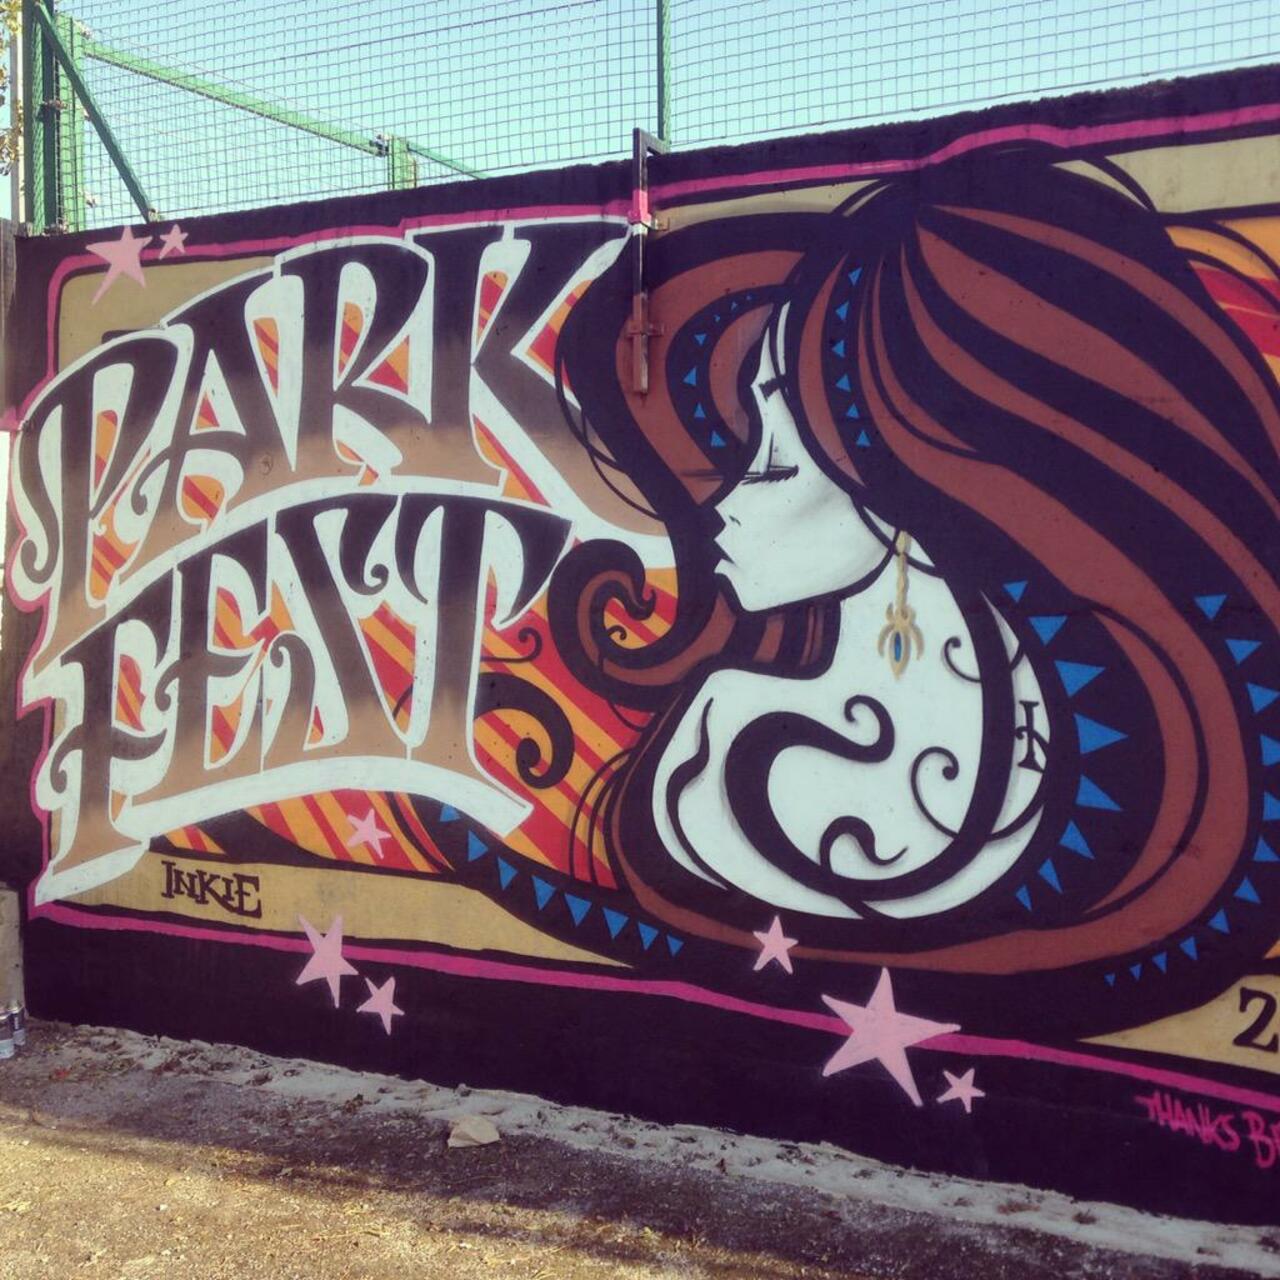 RT @inkiegraffiti: Early bird catches the worm #parkfest #Bristol #graffiti #streetart http://t.co/TZ2KoadXdU